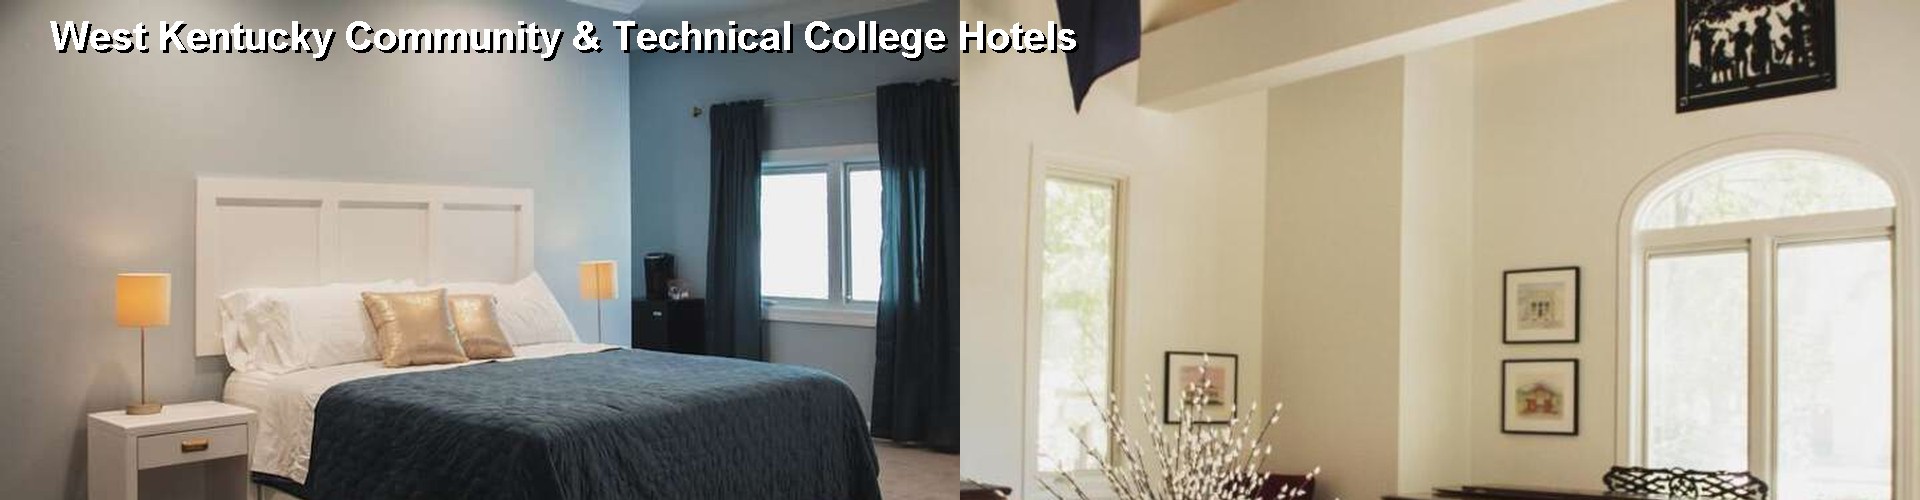 5 Best Hotels near West Kentucky Community & Technical College